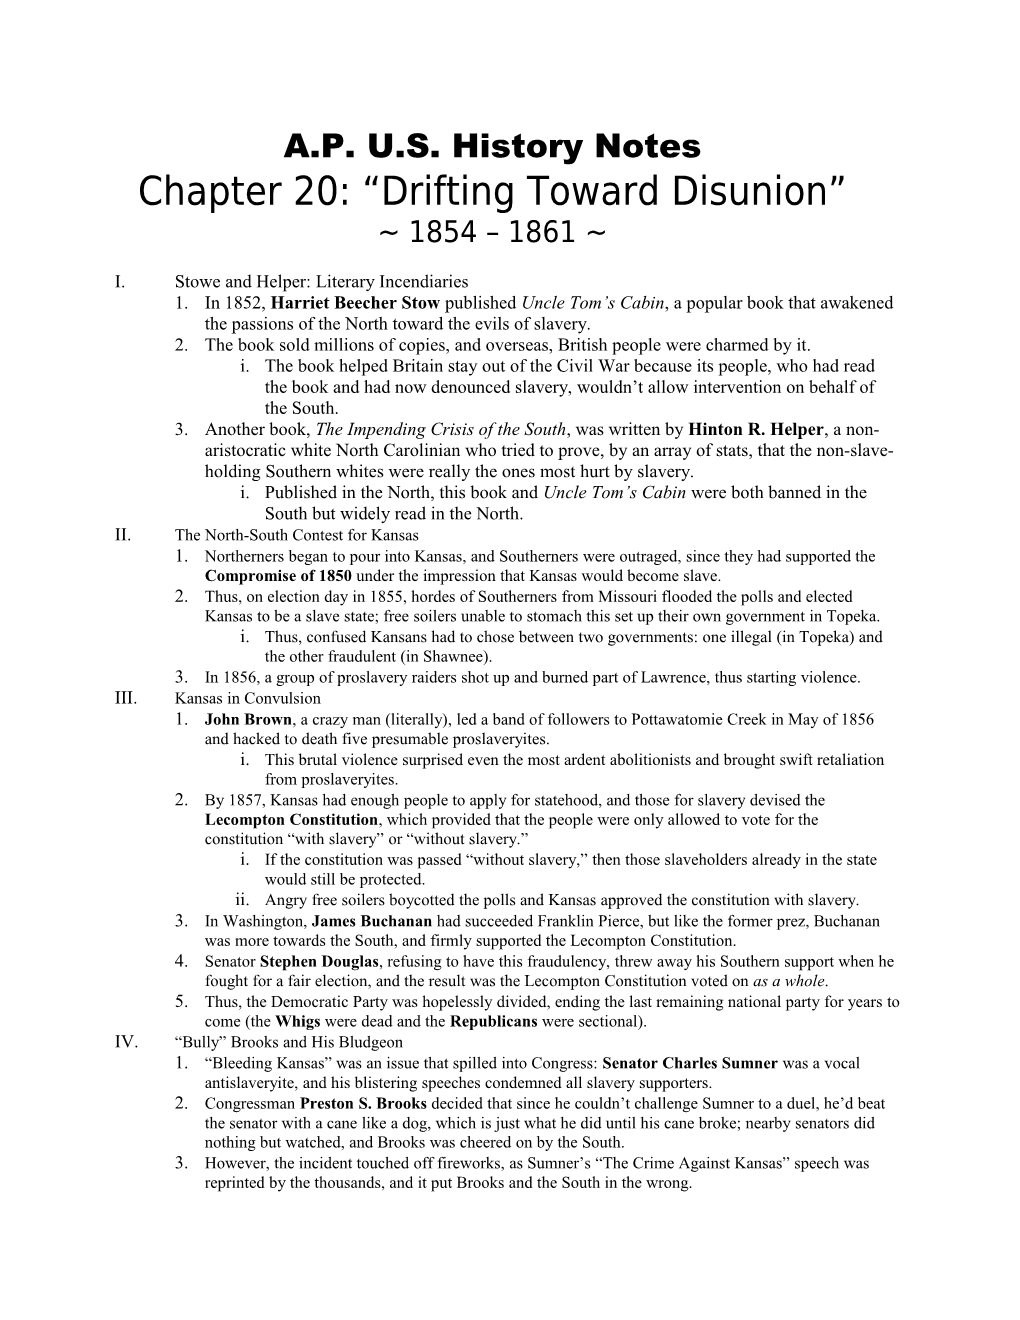 Chapter 20: Drifting Toward Disunion